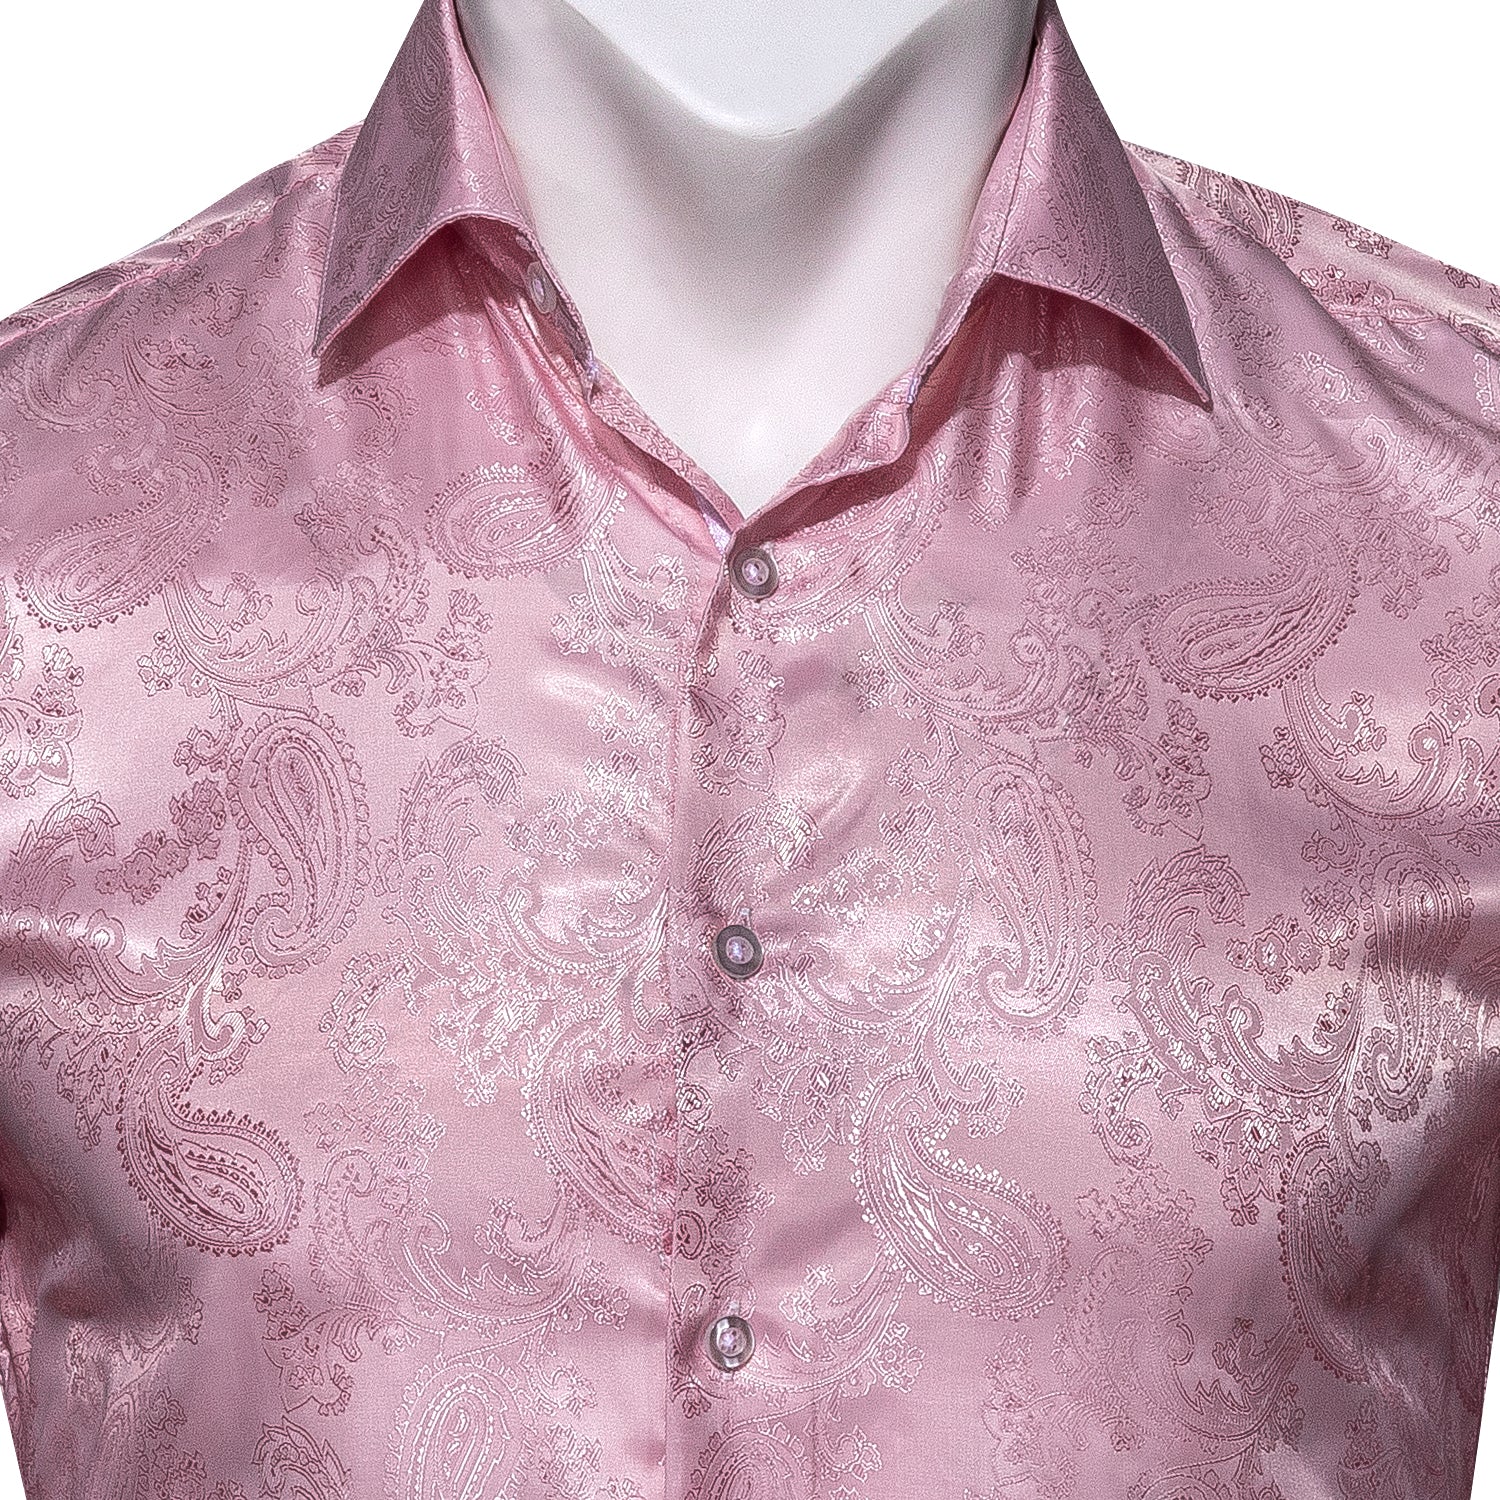 Barry.wang Button Down Shirt Pink Paisley Men's Long Sleeves Silk Shirt Fashion